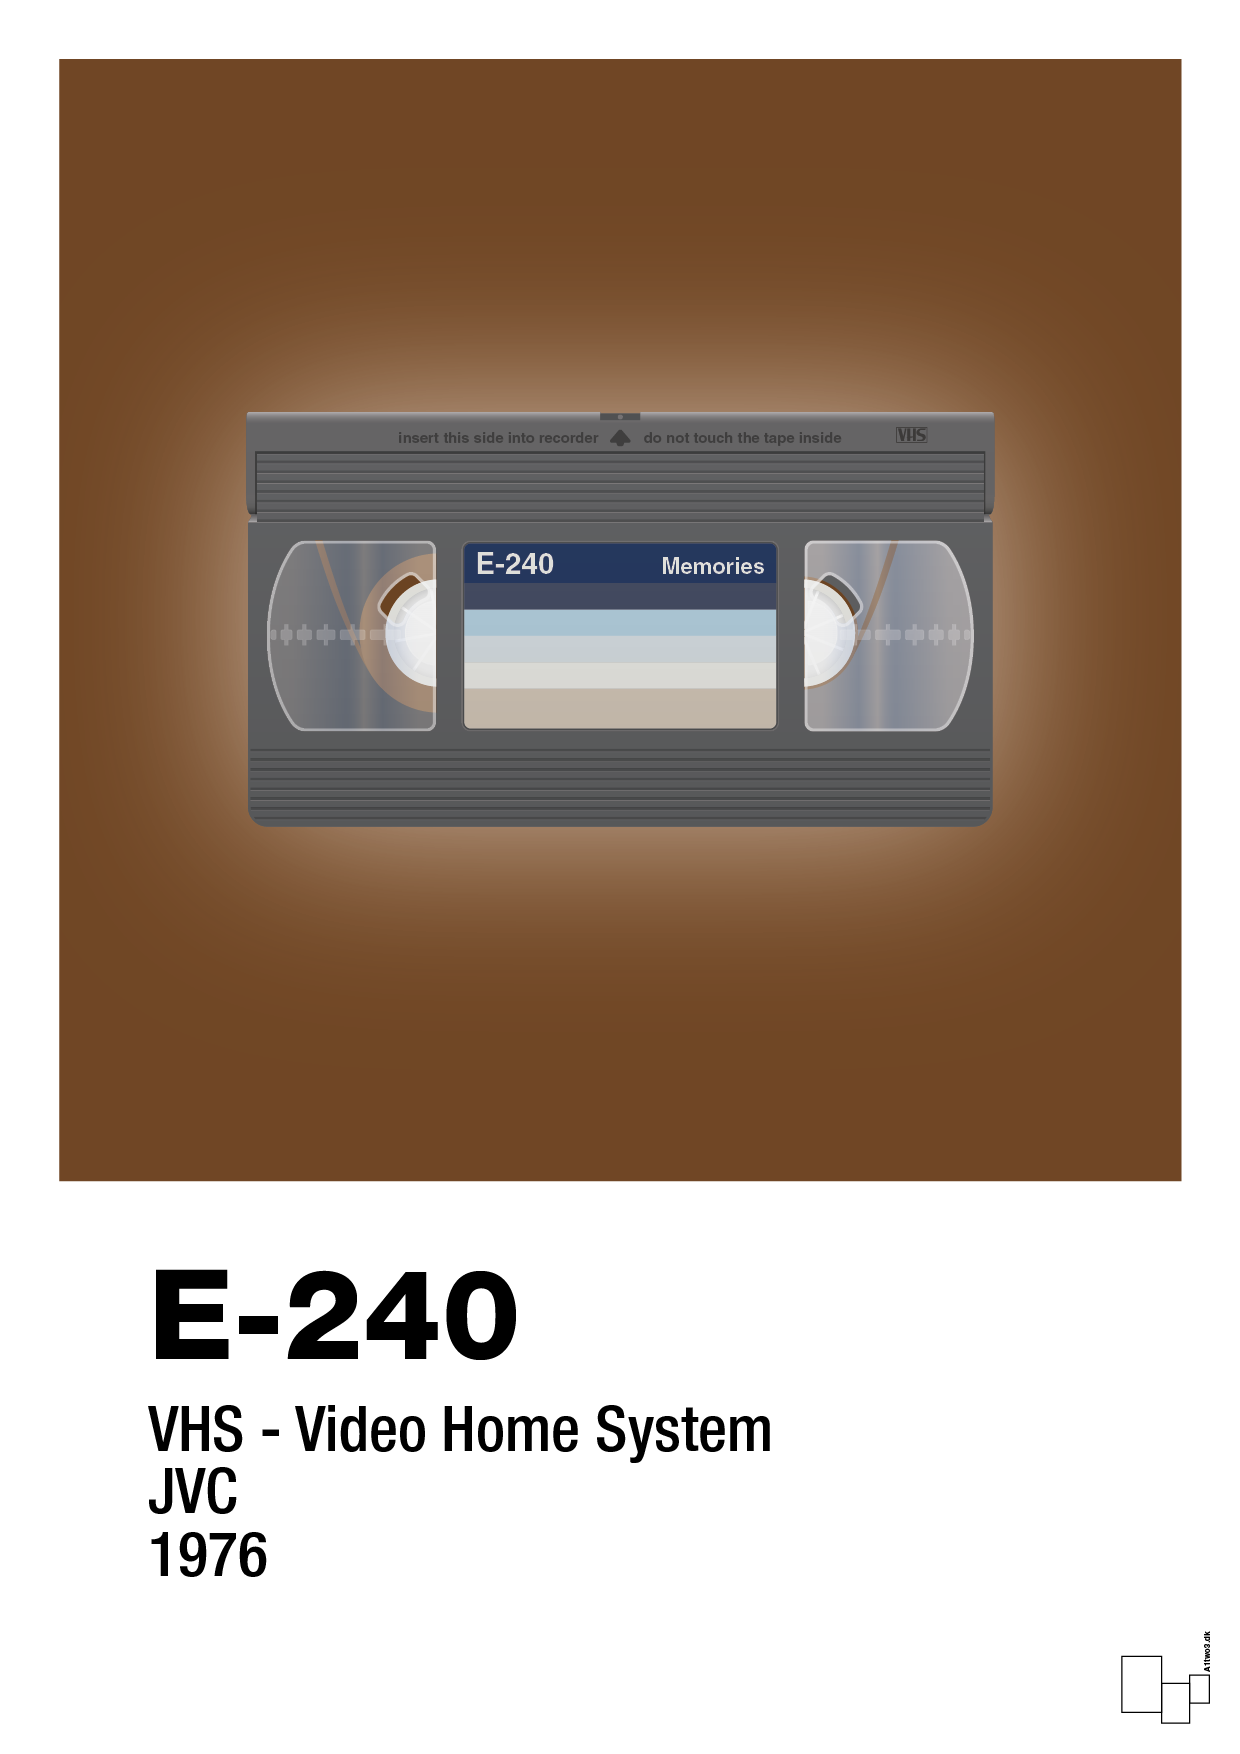 videobånd e-240 - Plakat med Grafik i Dark Brown